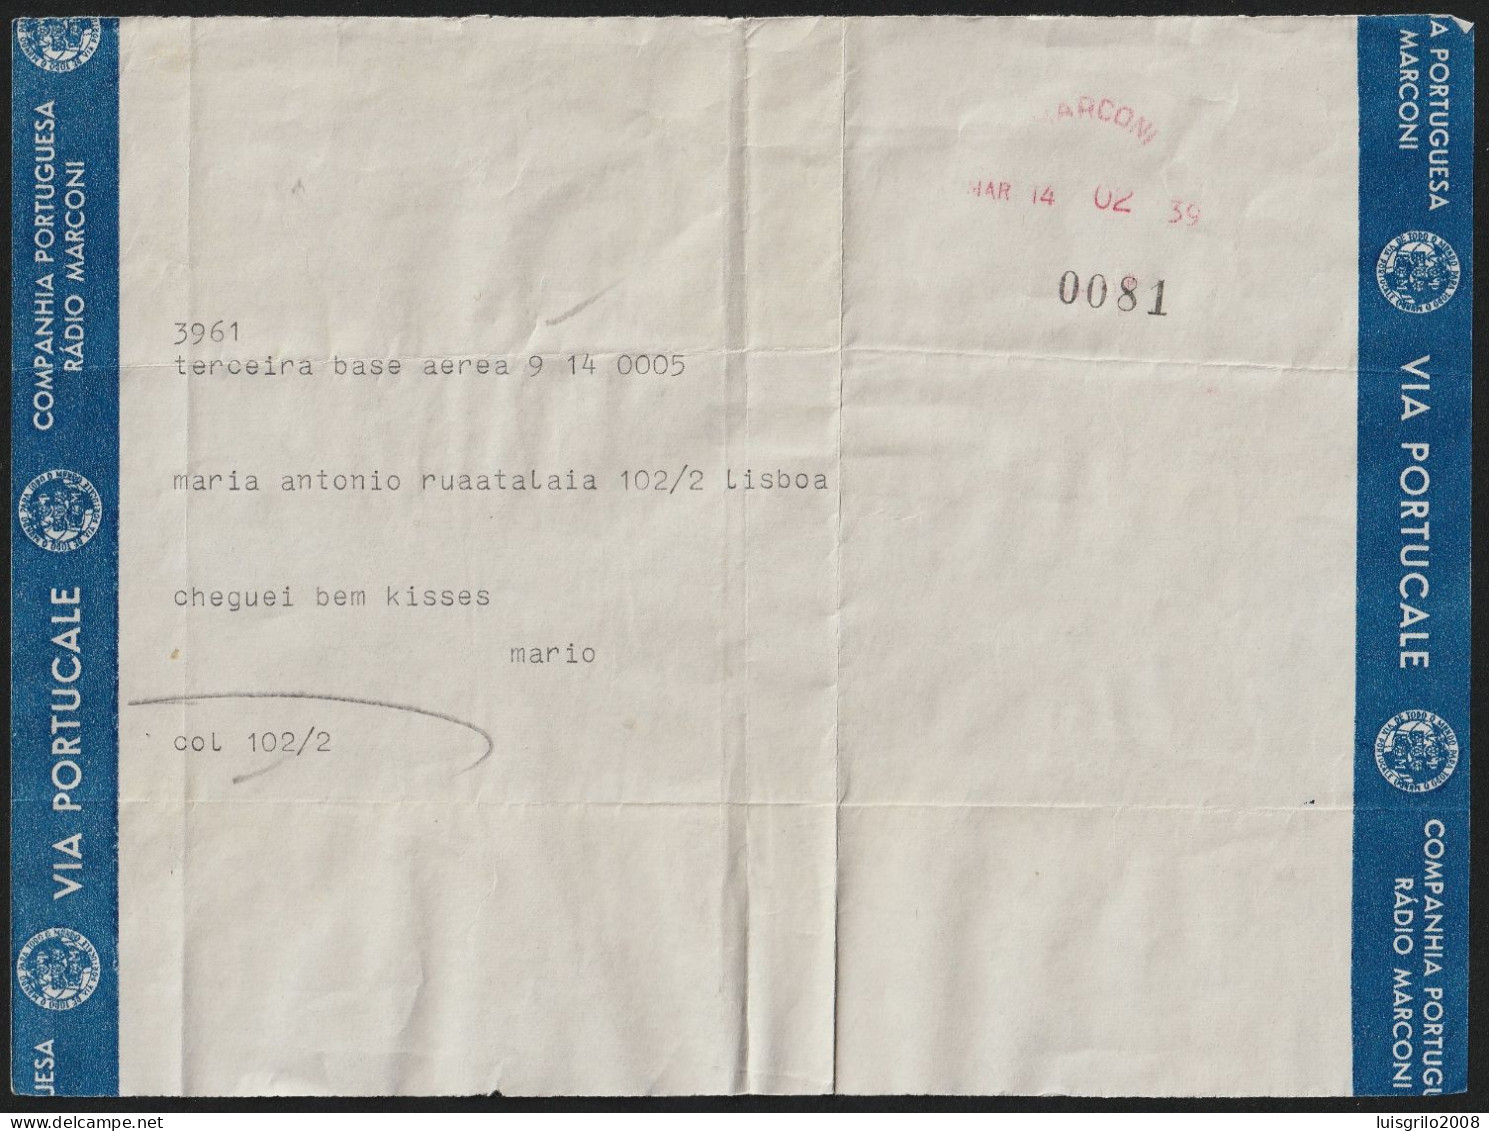 Telegram/ Telegrama Radio Marconi - Base Aérea Da Terceira, Açores > Lisboa -|- Postmark - Marconi. Lisboa. 1939 - Cartas & Documentos